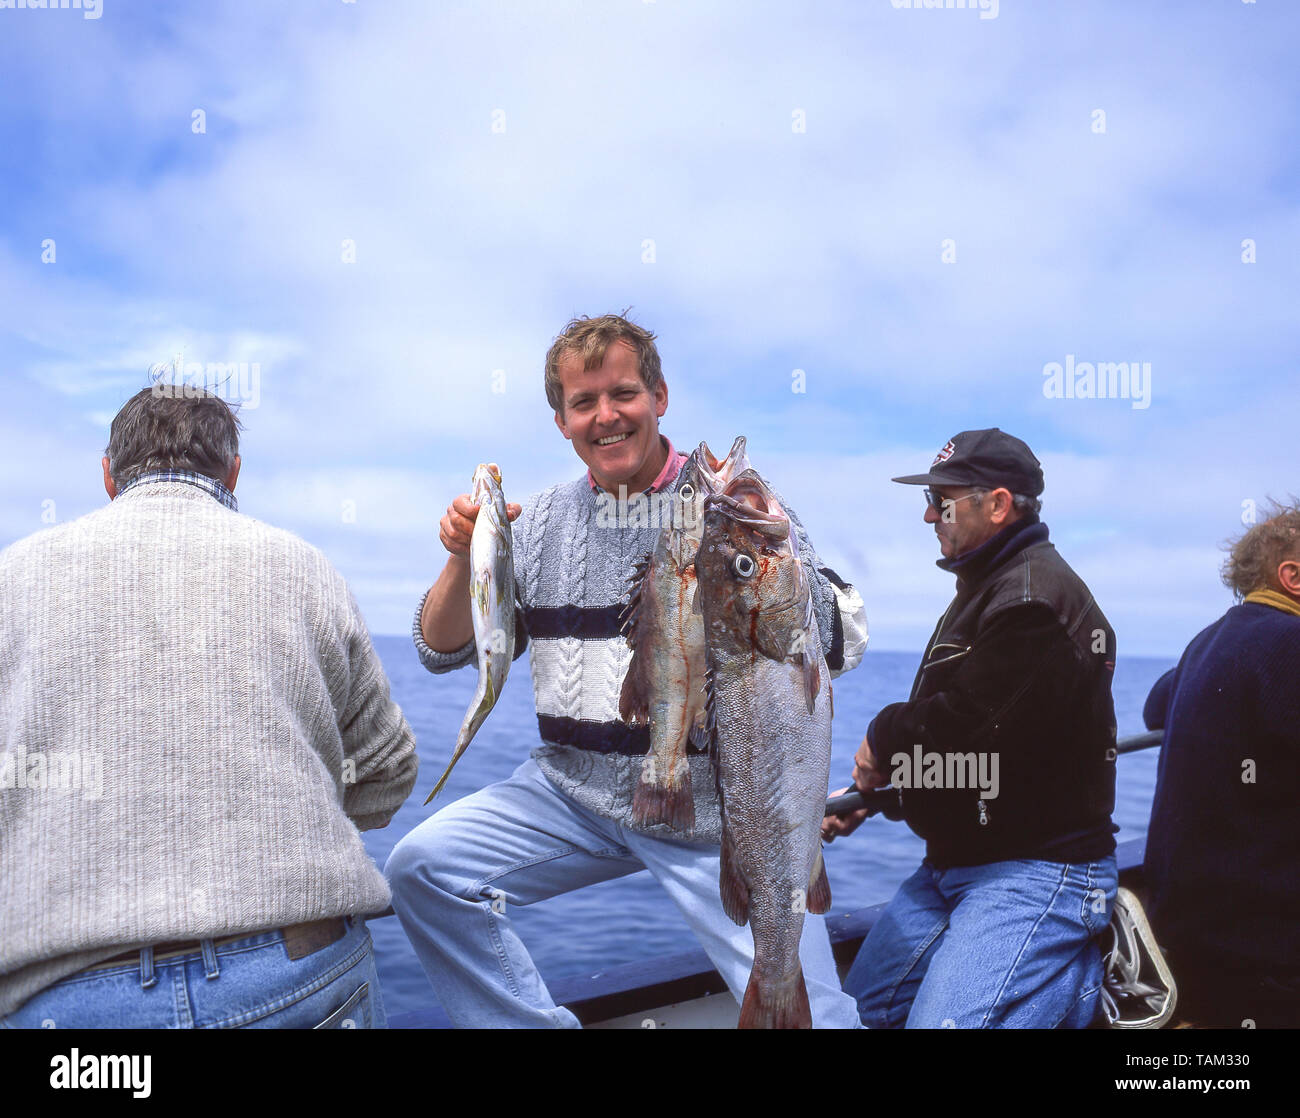 Young man holding fish catch on fishing boat, Oamaru, Otago Region, South Island, New Zealand Stock Photo